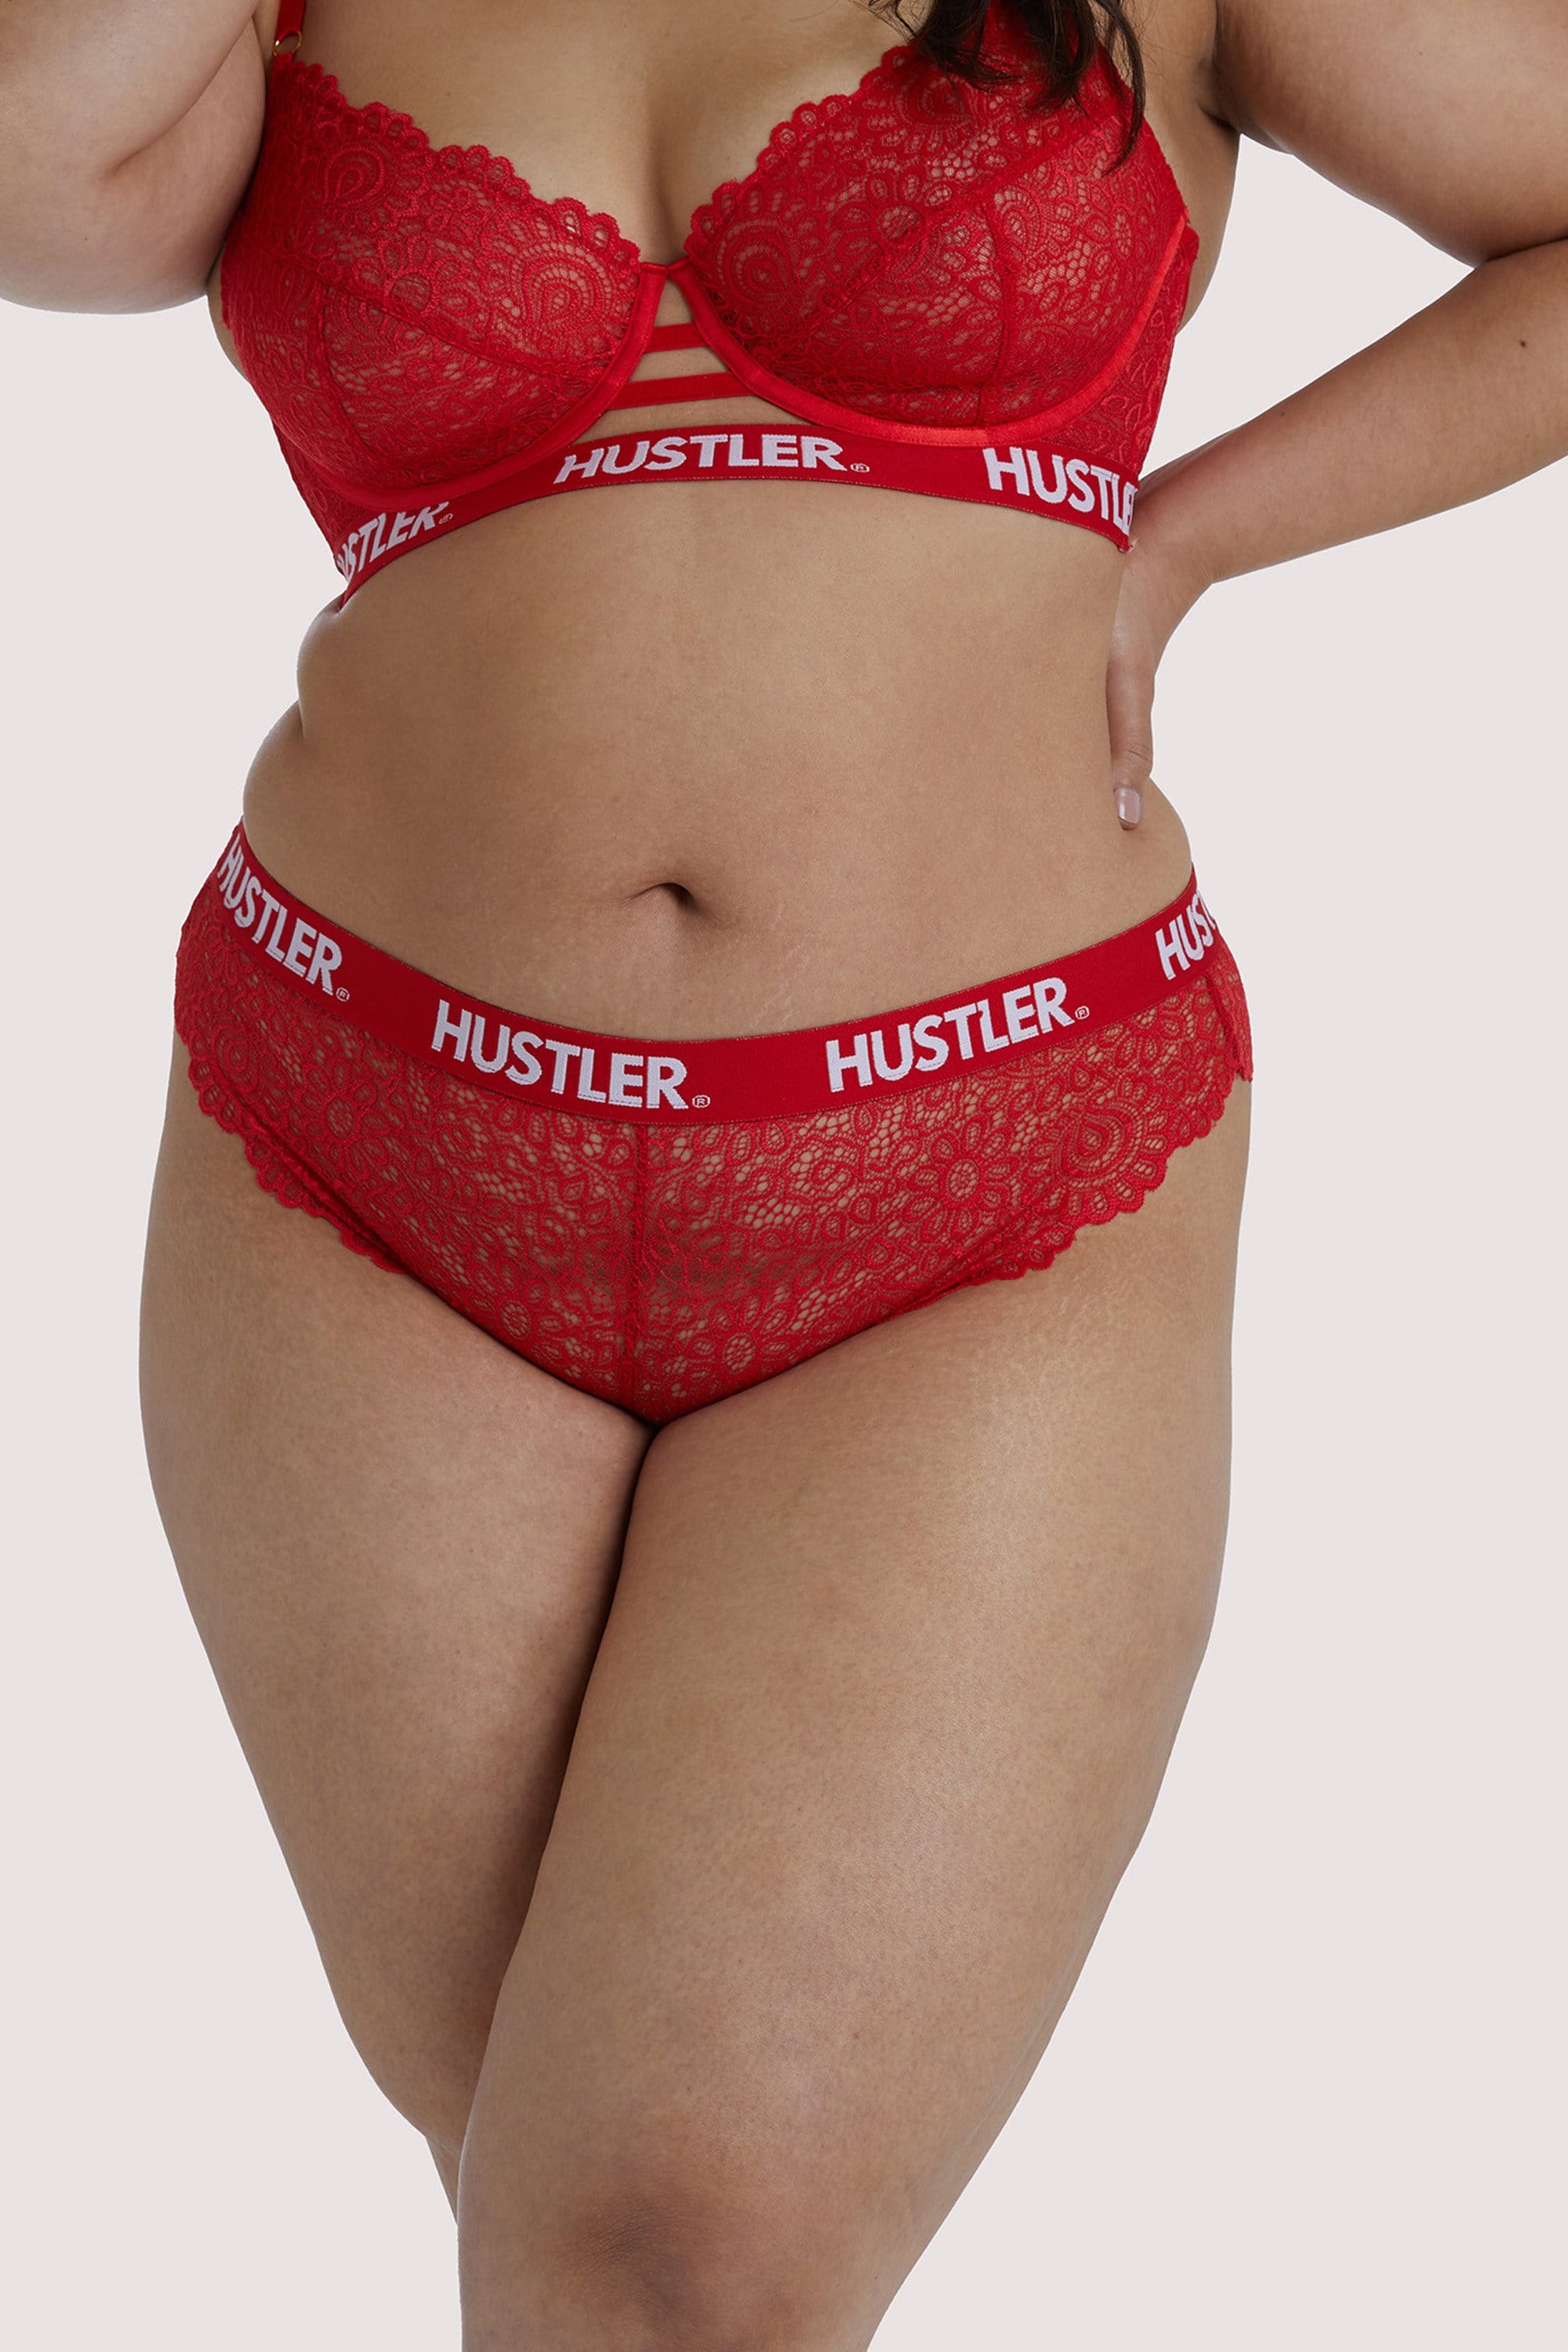 Hustler Branded Red Lace Curve Brief